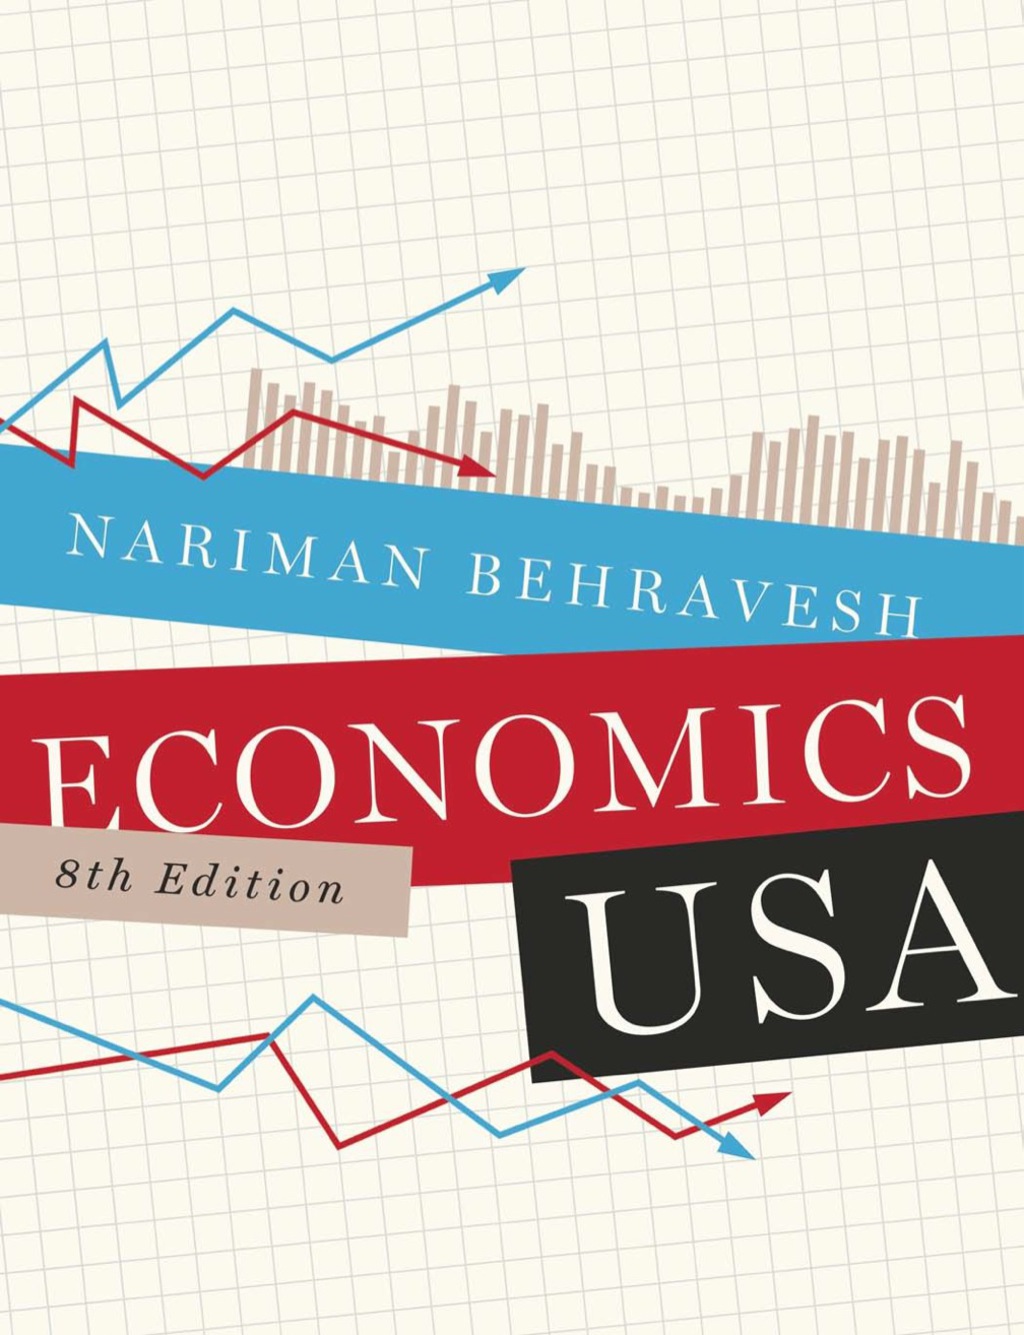 Economics USA (Eighth Edition) (eBook) - Nariman Behravesh